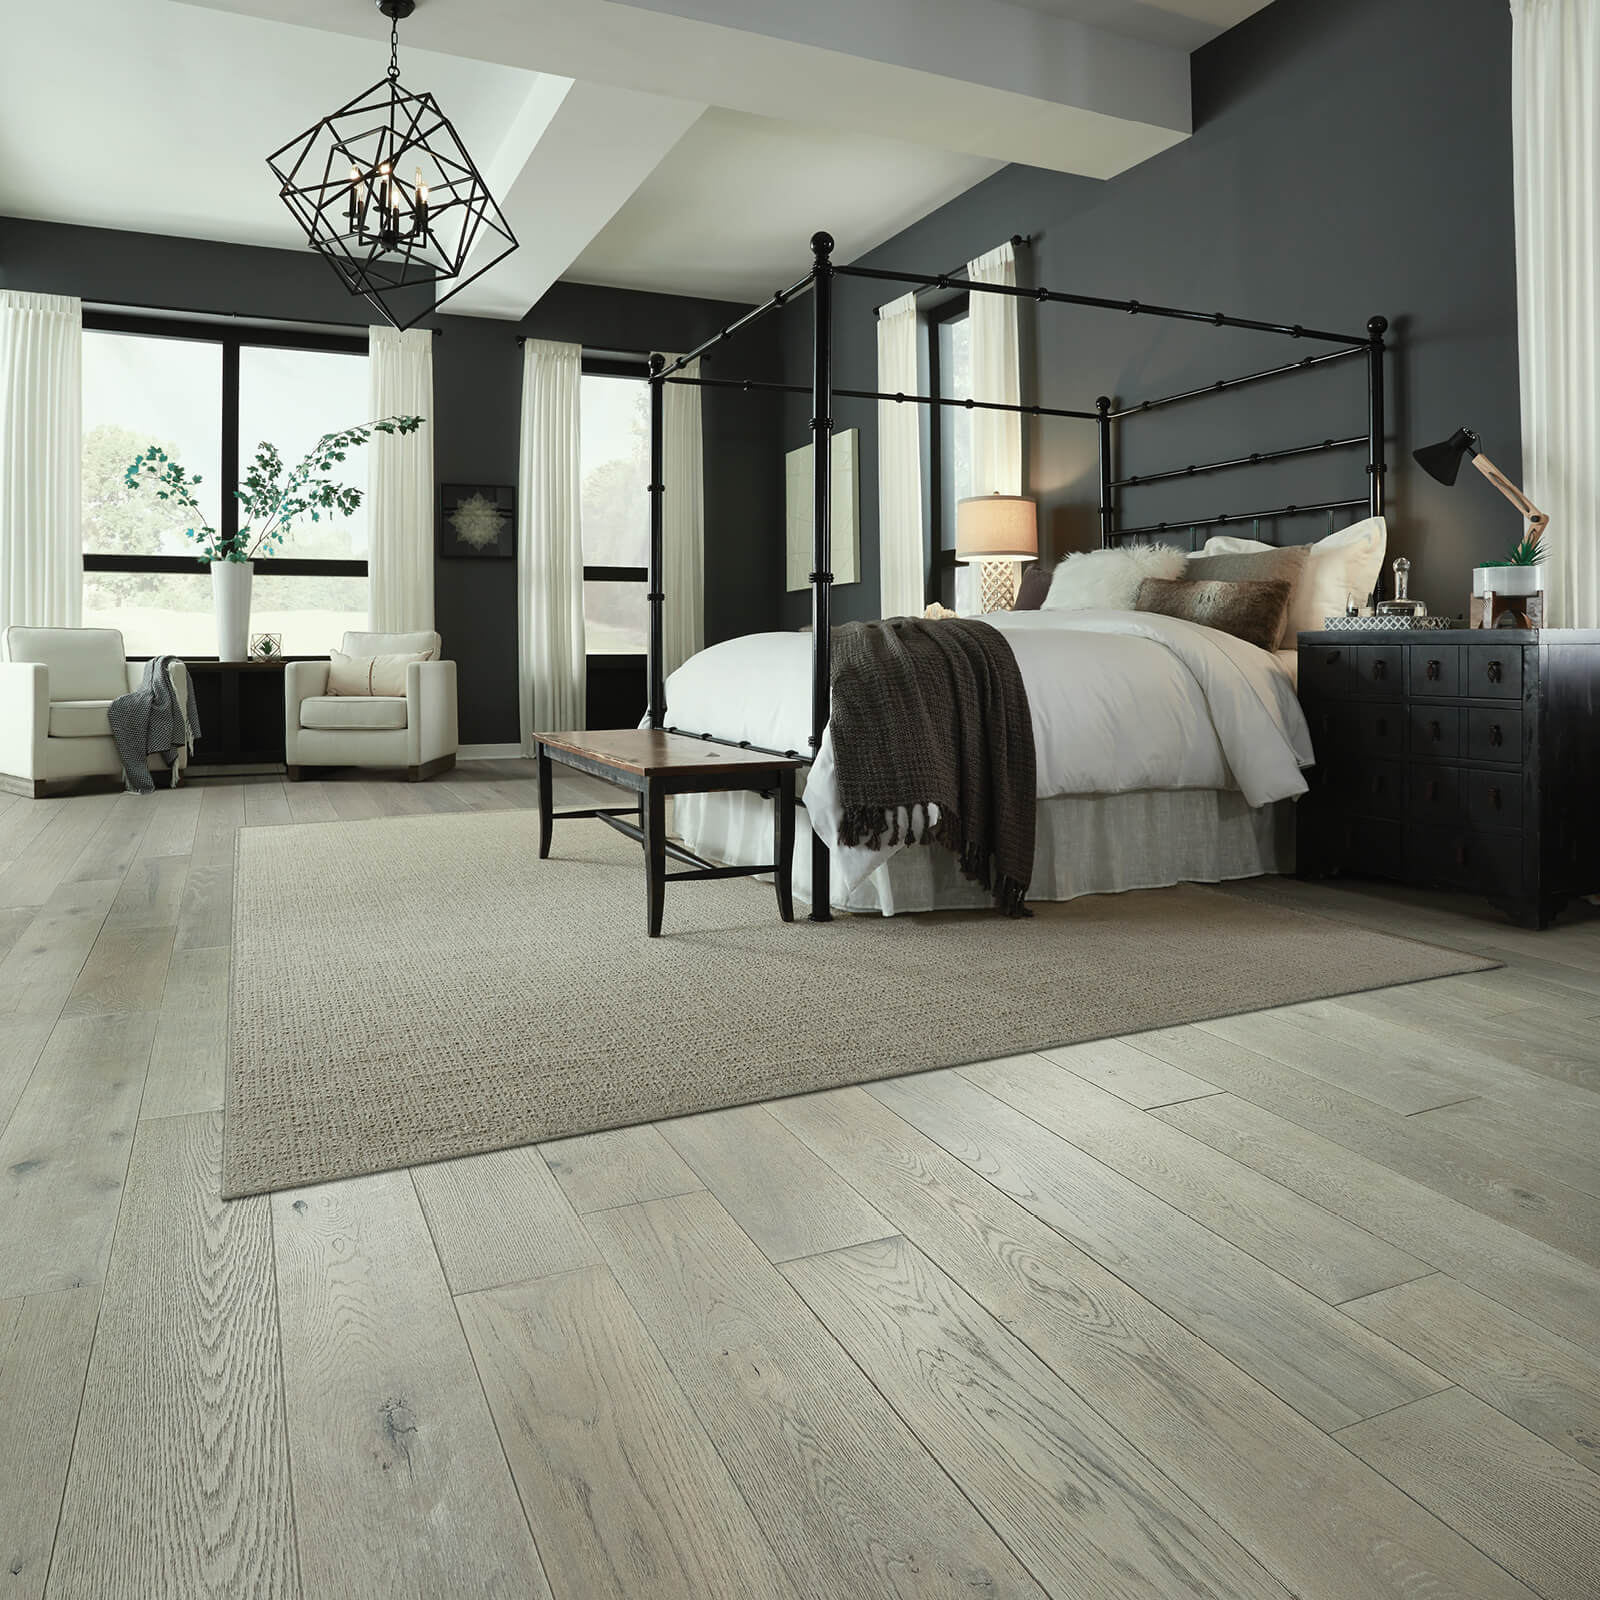 Kensington flooring | Elite Builder Services